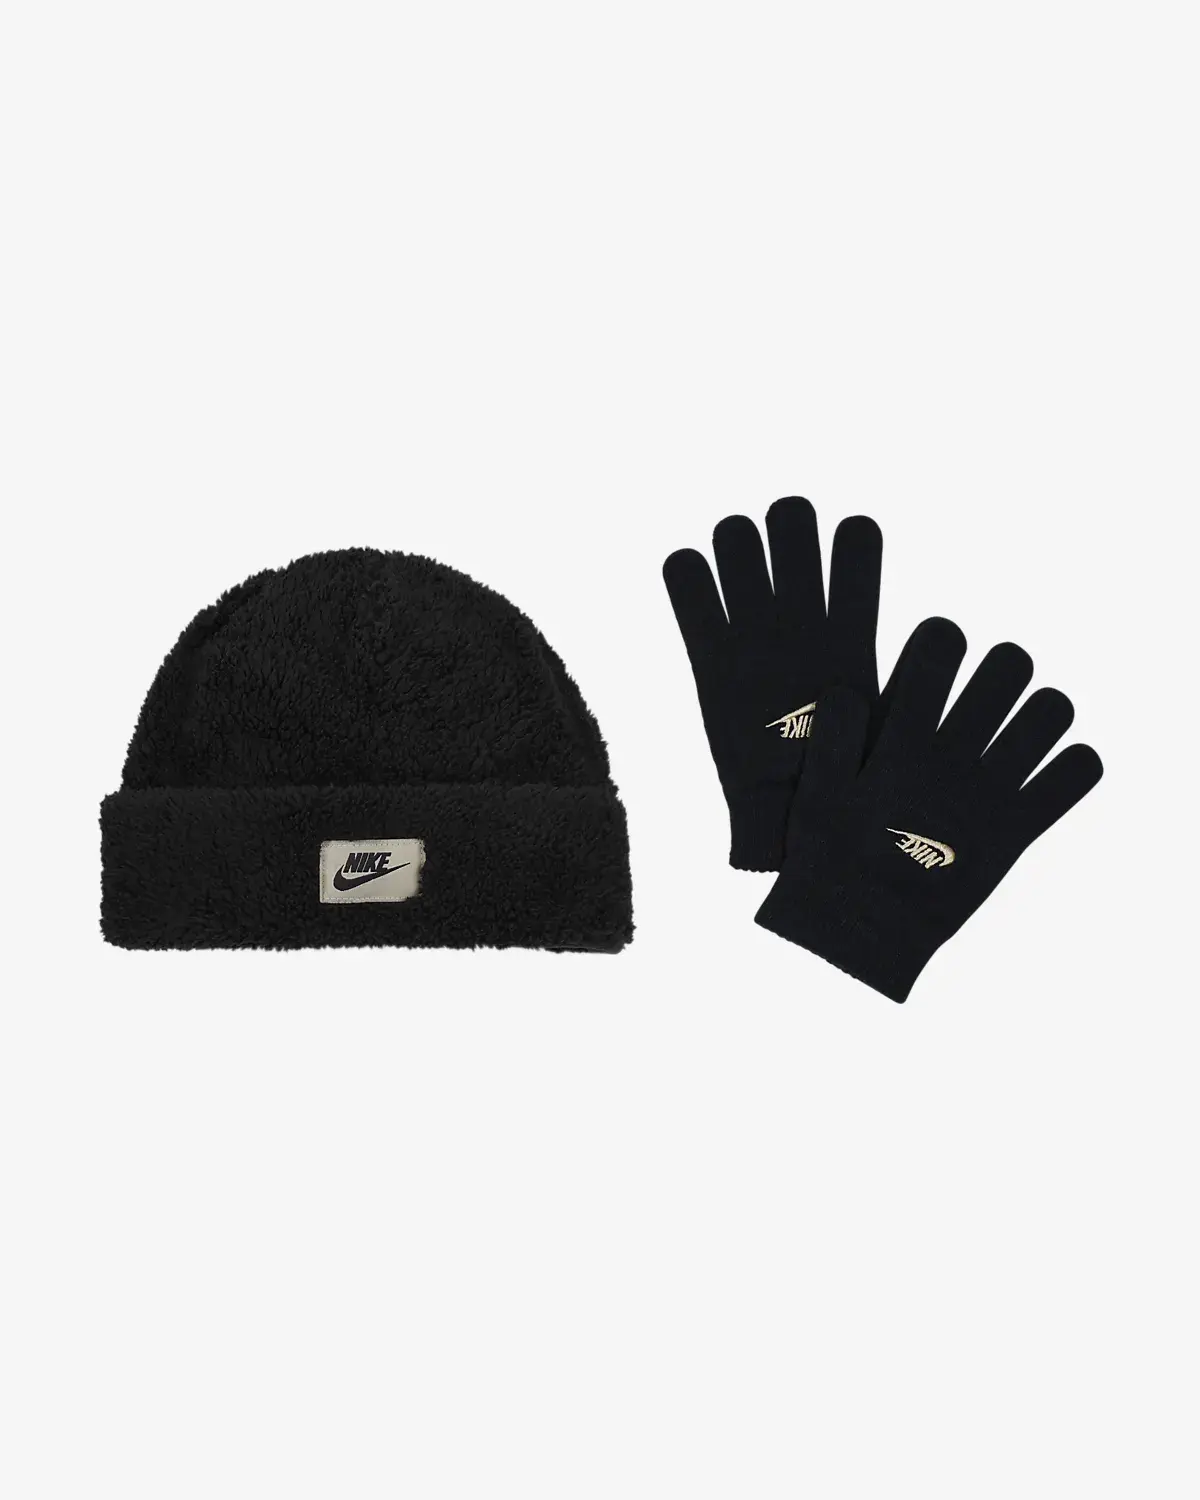 Nike Cozy Peak Beanie and Gloves Set. 1